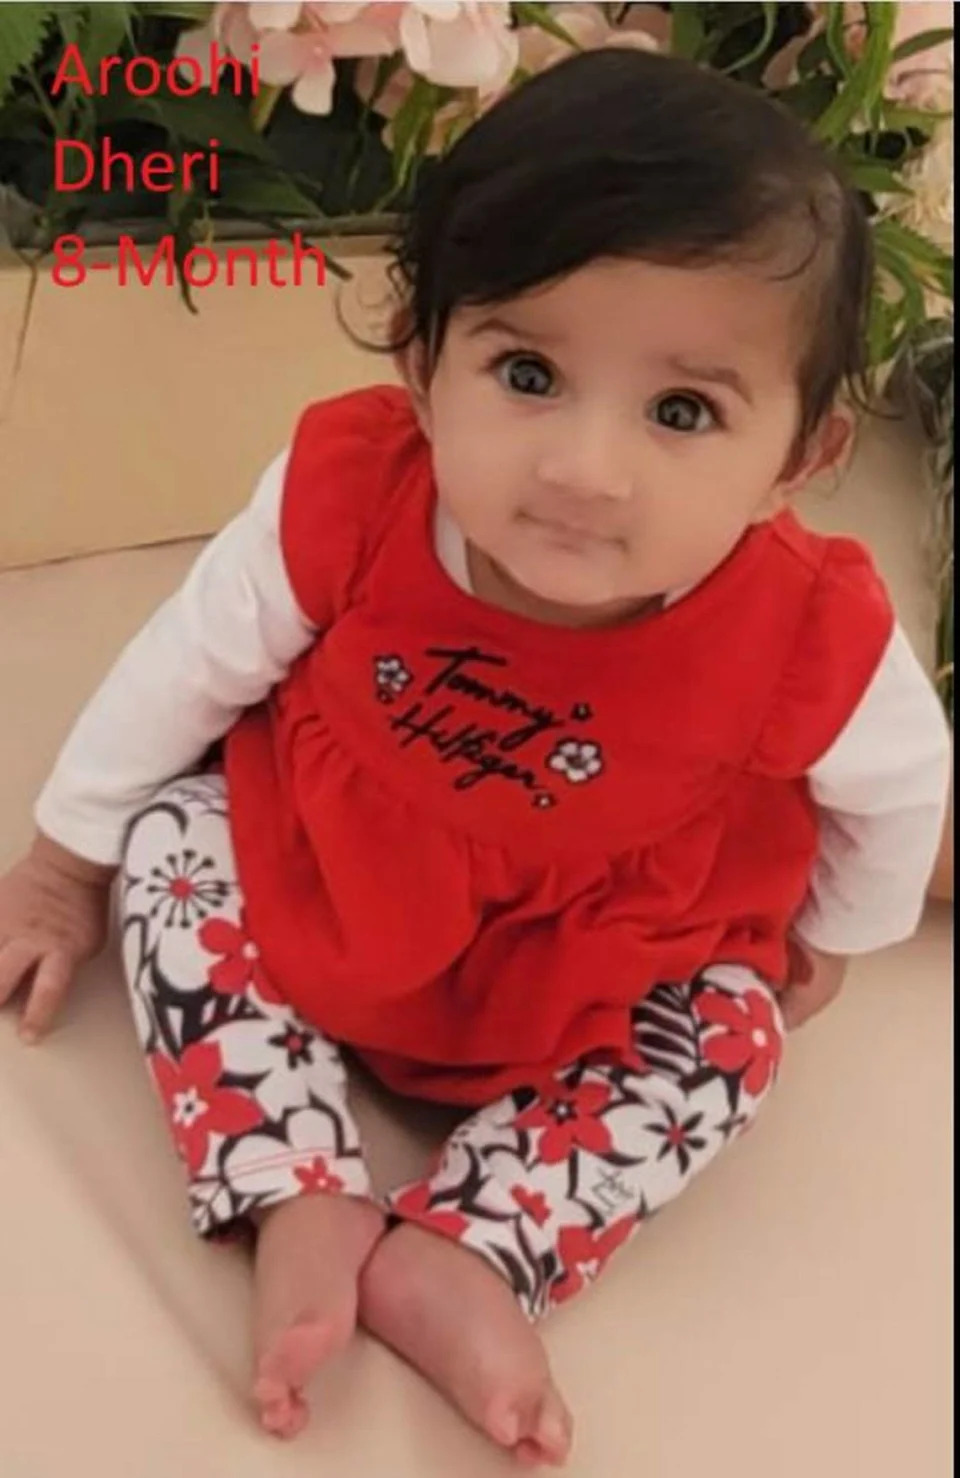 Aroohi Dheri, 8 months